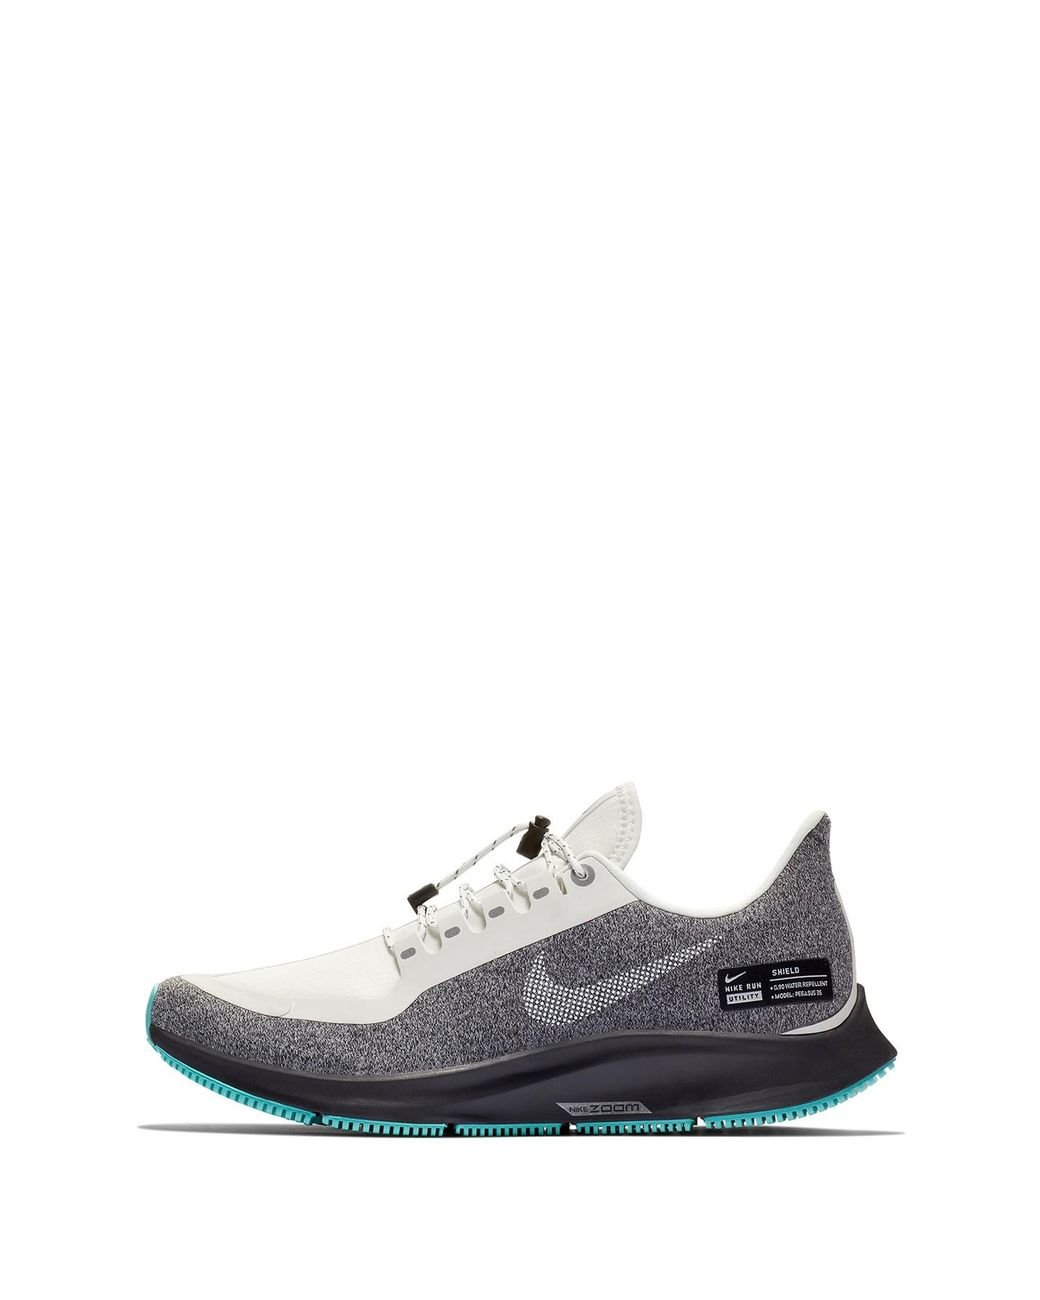 Nike pegasus 35 nike shoes Air Zoom Pegasus 35 Shield Gs Water Repellent Running Shoe in